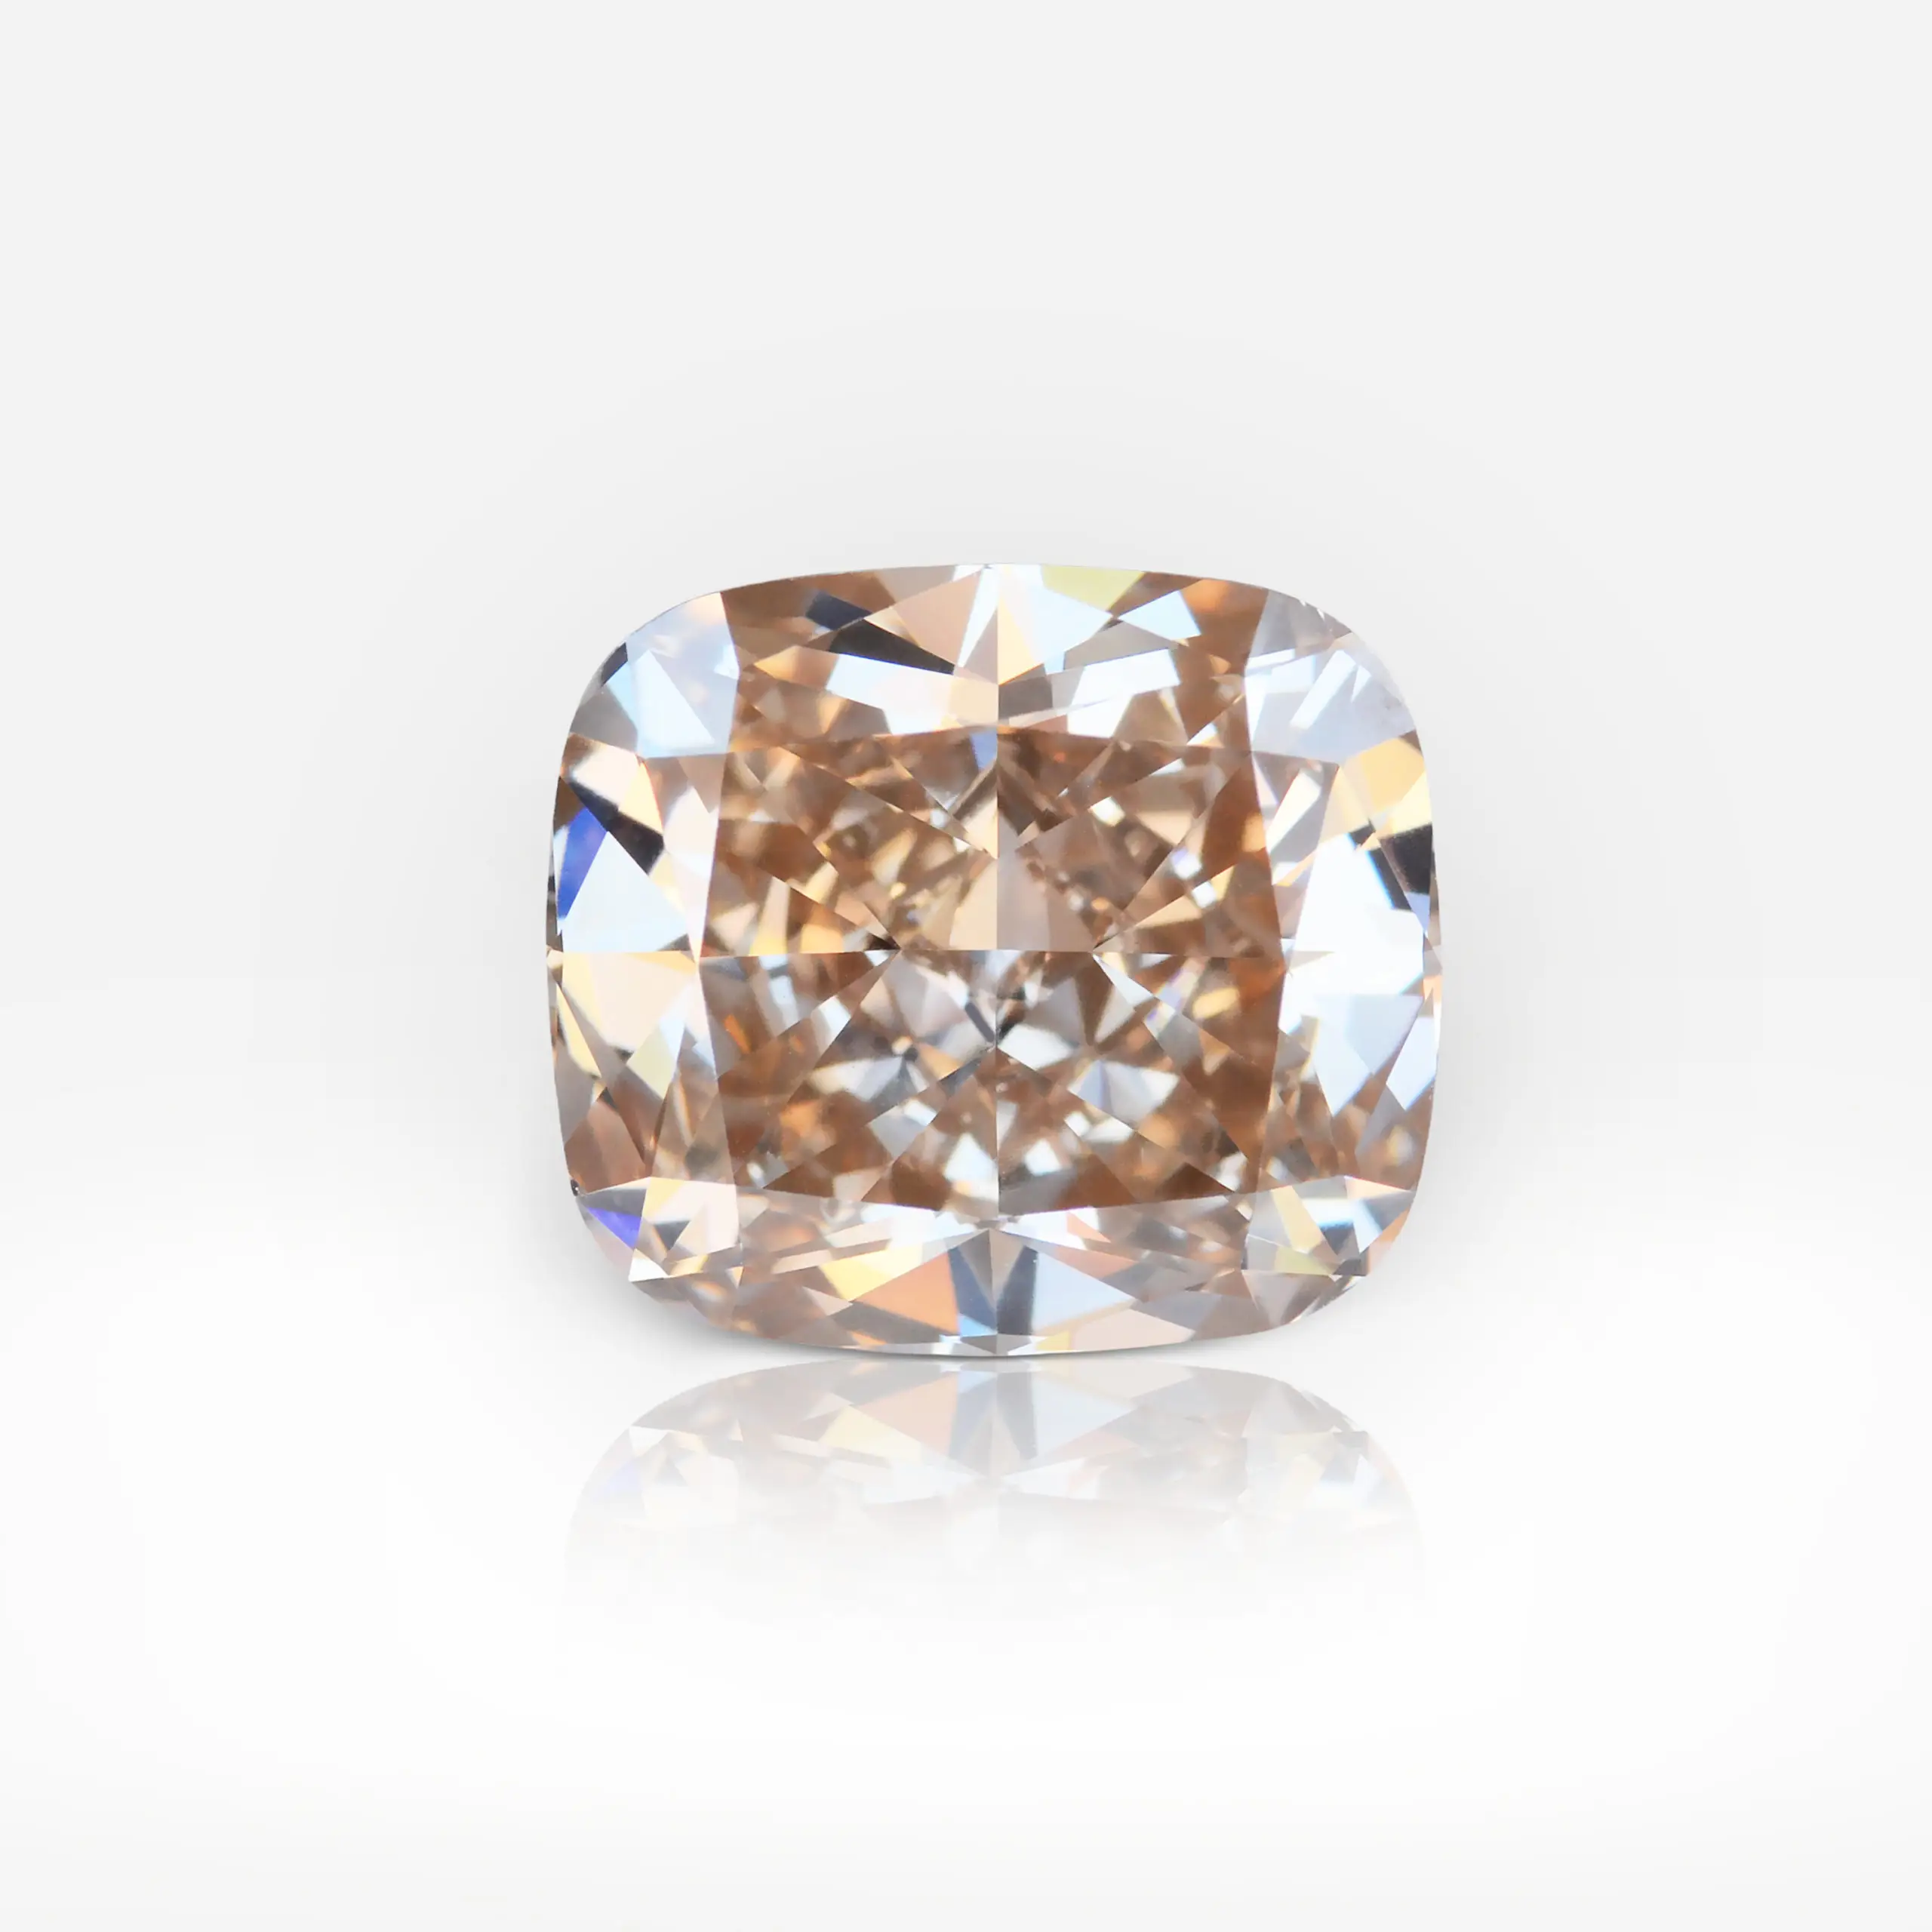 5.01 carat Fancy Light Yellowish Brown VVS1 Cushion Shape Diamond GIA - picture 1